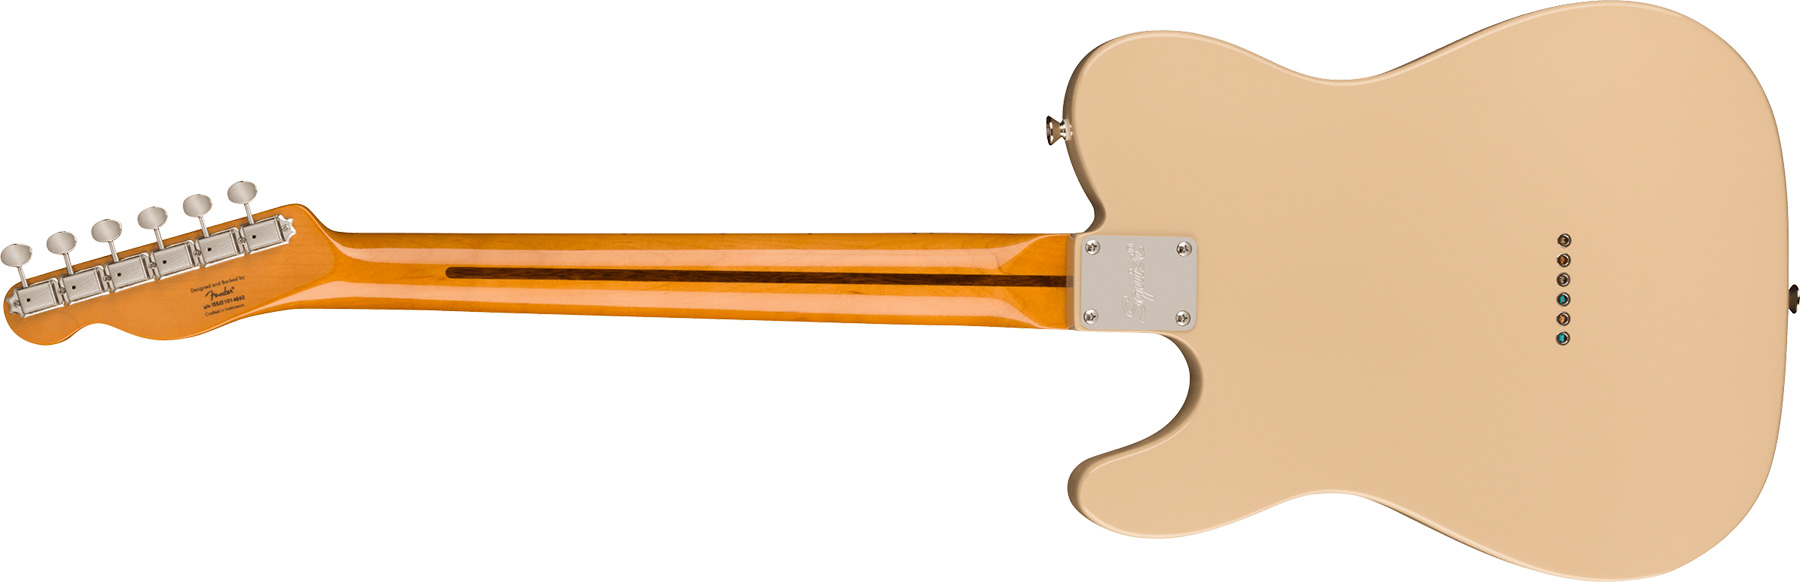 Squier Tele '60s Thinline Gold Anodized Pickguard Classic Vibe Fsr 2s Ht Mn - Desert Sand - Televorm elektrische gitaar - Variation 1